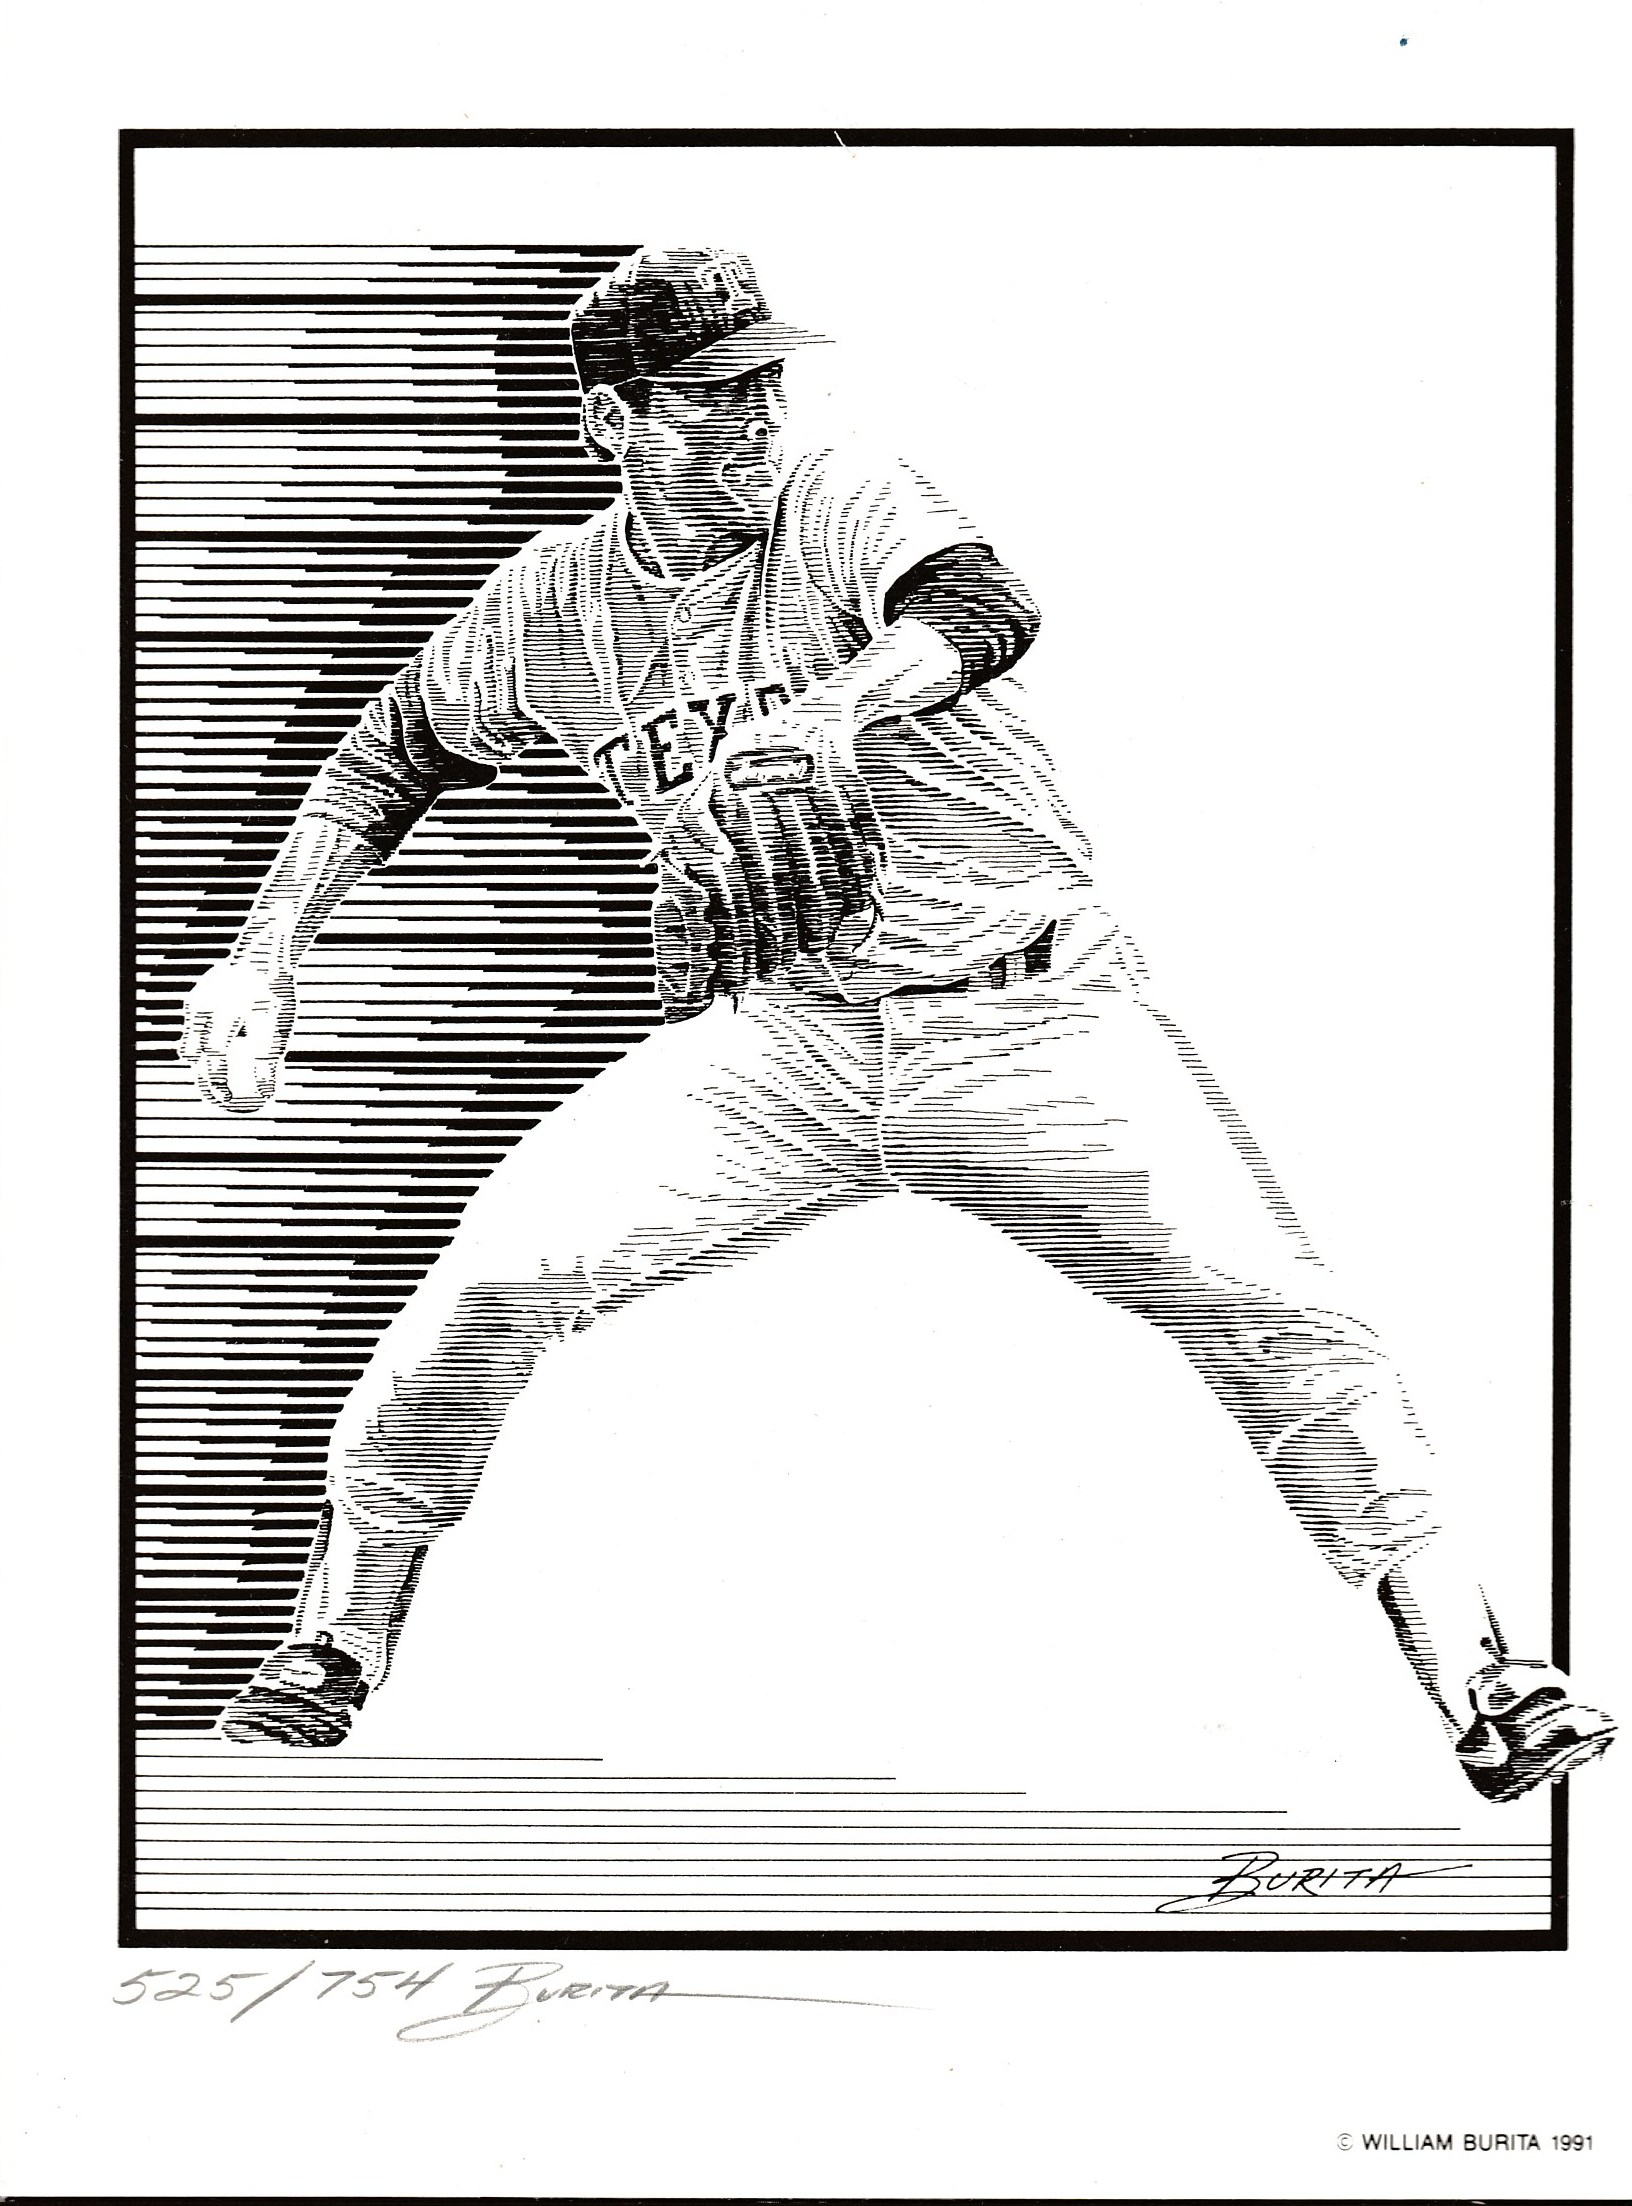  Burita - BO JACKSON - Limited Edition Print (#28/990) 1991 (White Sox) Baseball cards value